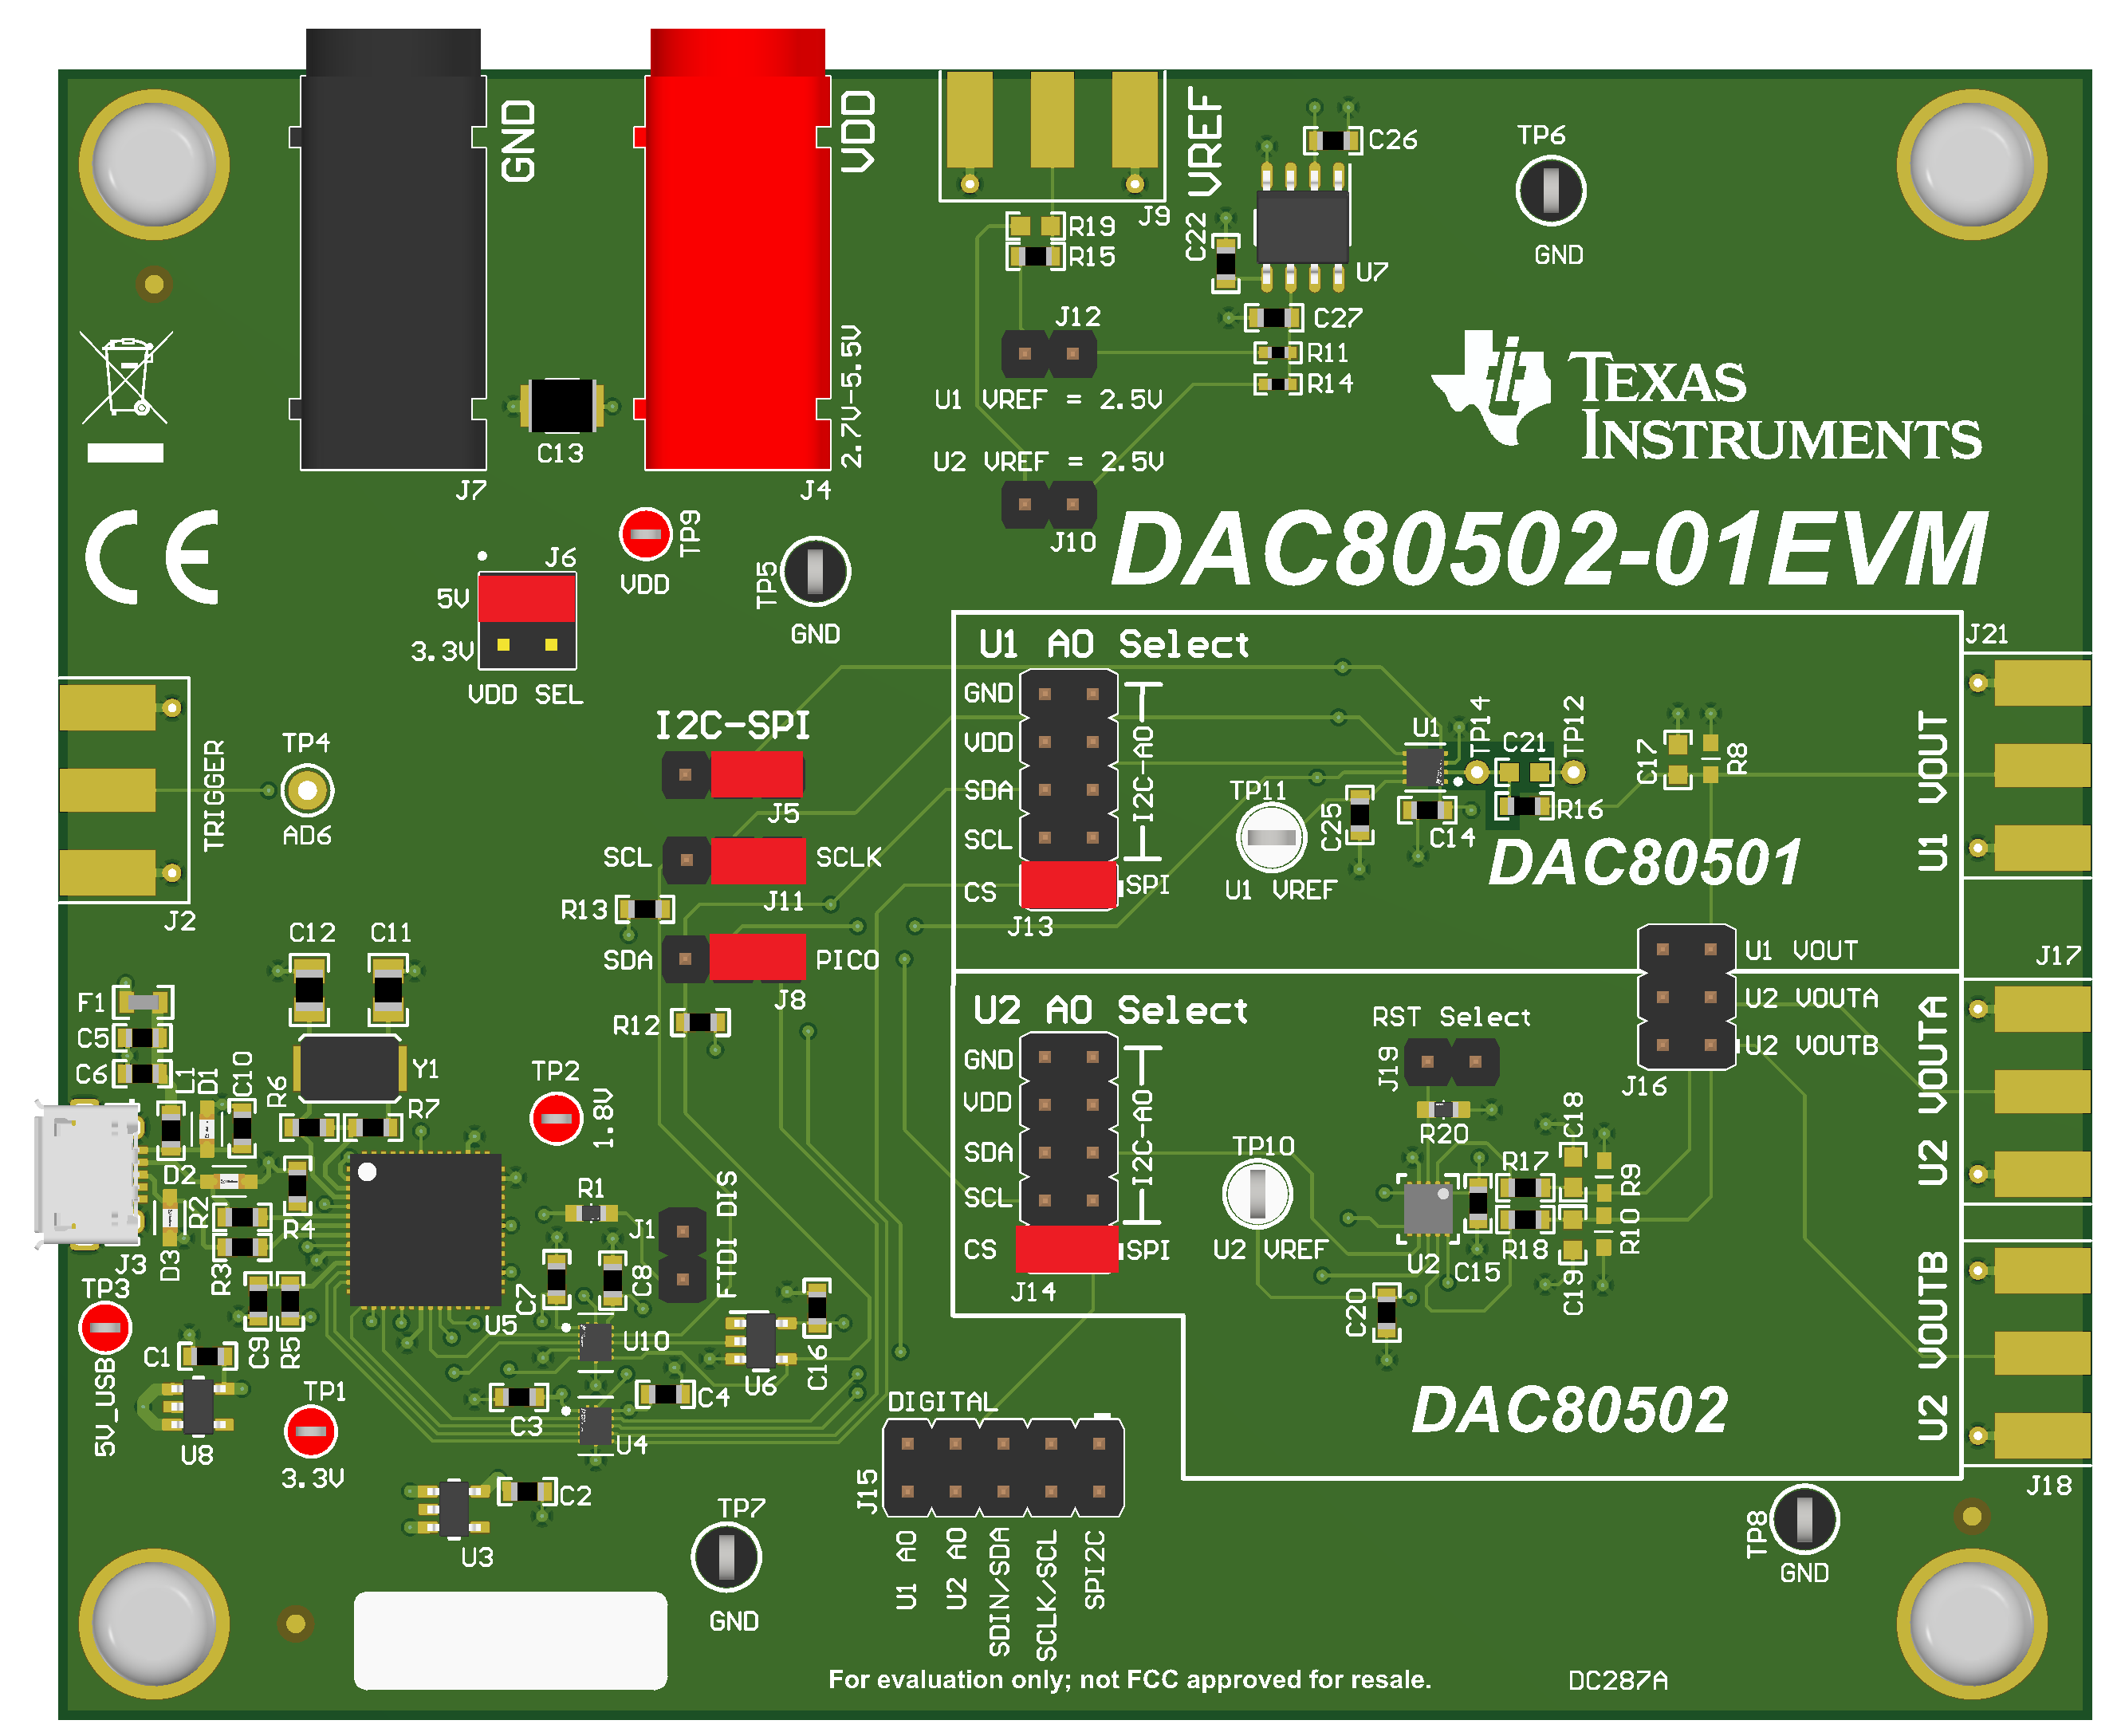 DAC80502-01EVM DAC80502-01EVM Default Jumper Settings